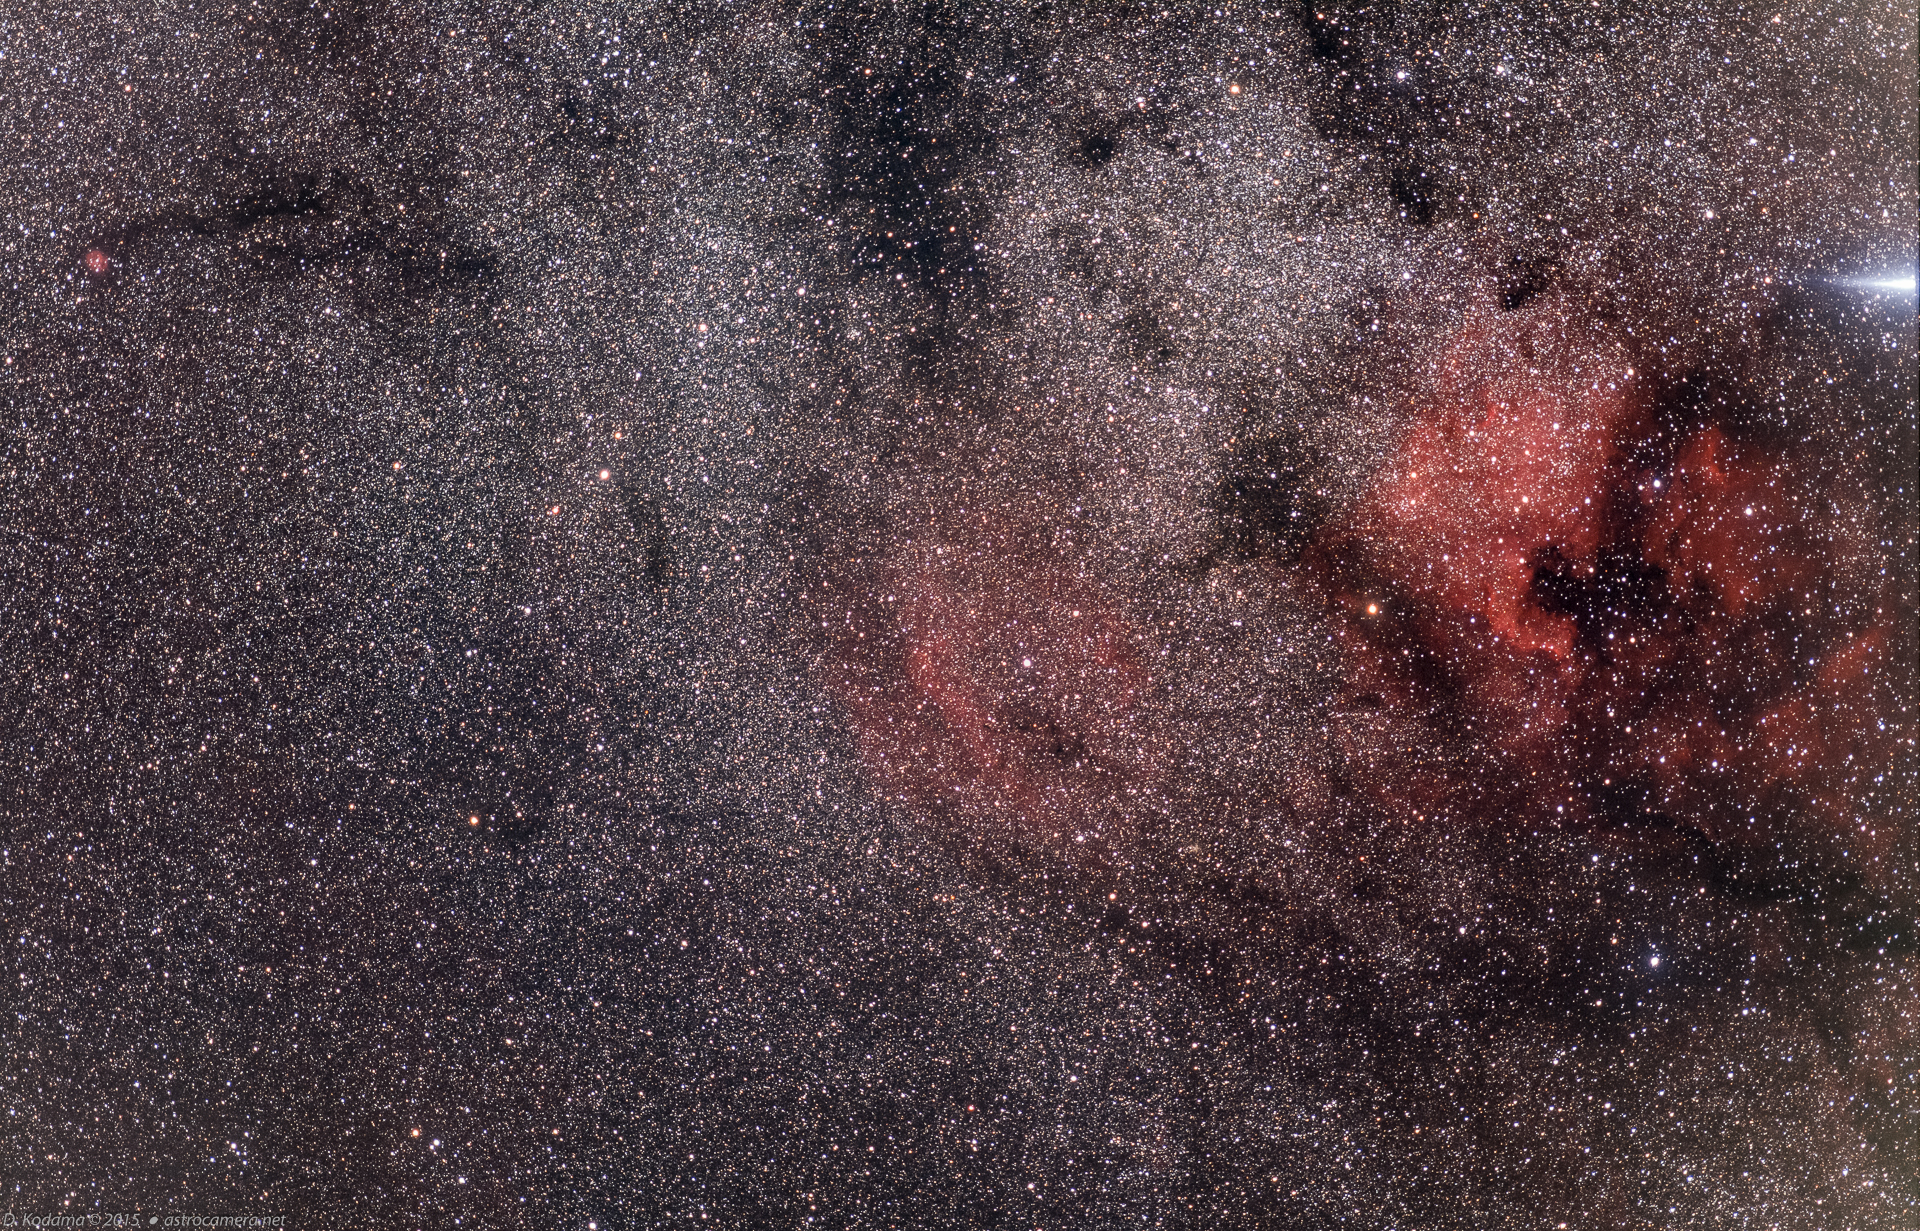 Cocoon to North America Nebula - 13 June 2015